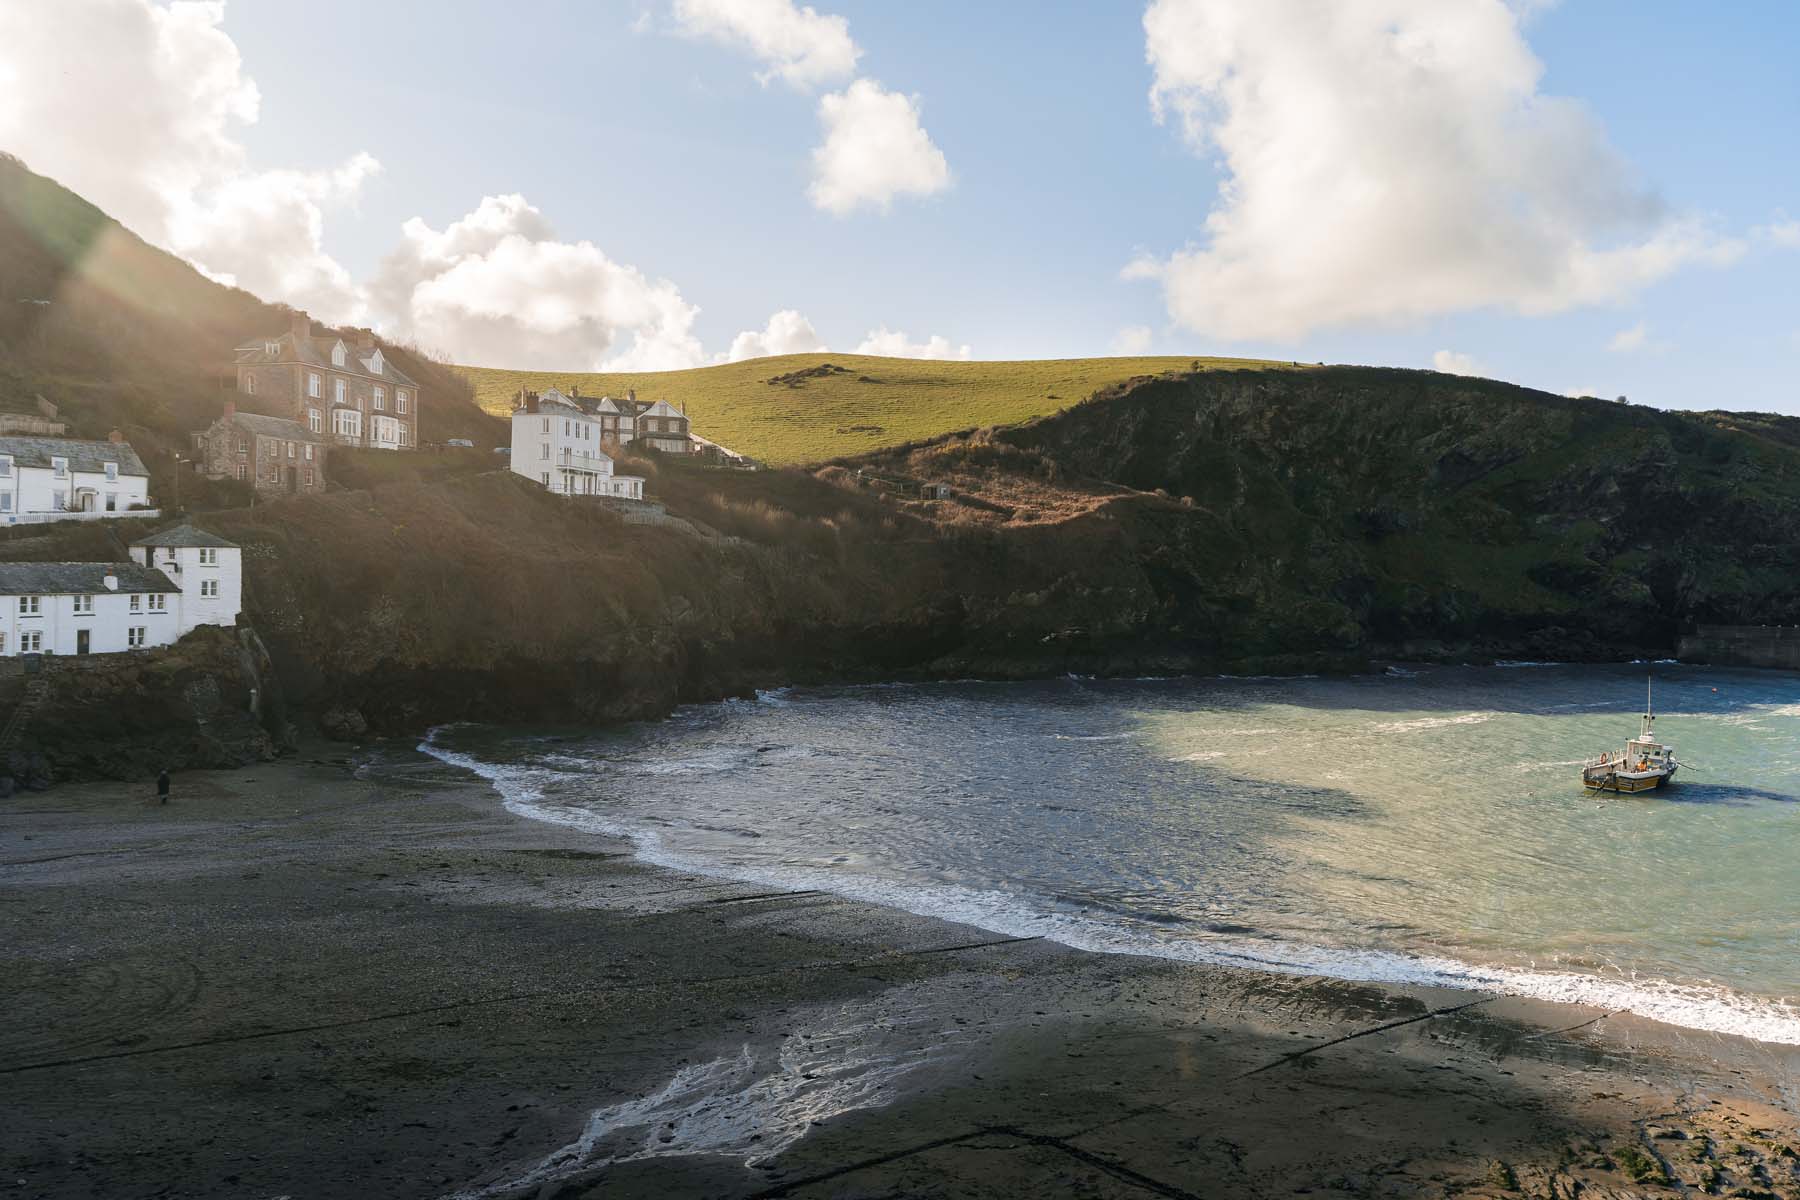 A Cornish cove with sandy beach and sea